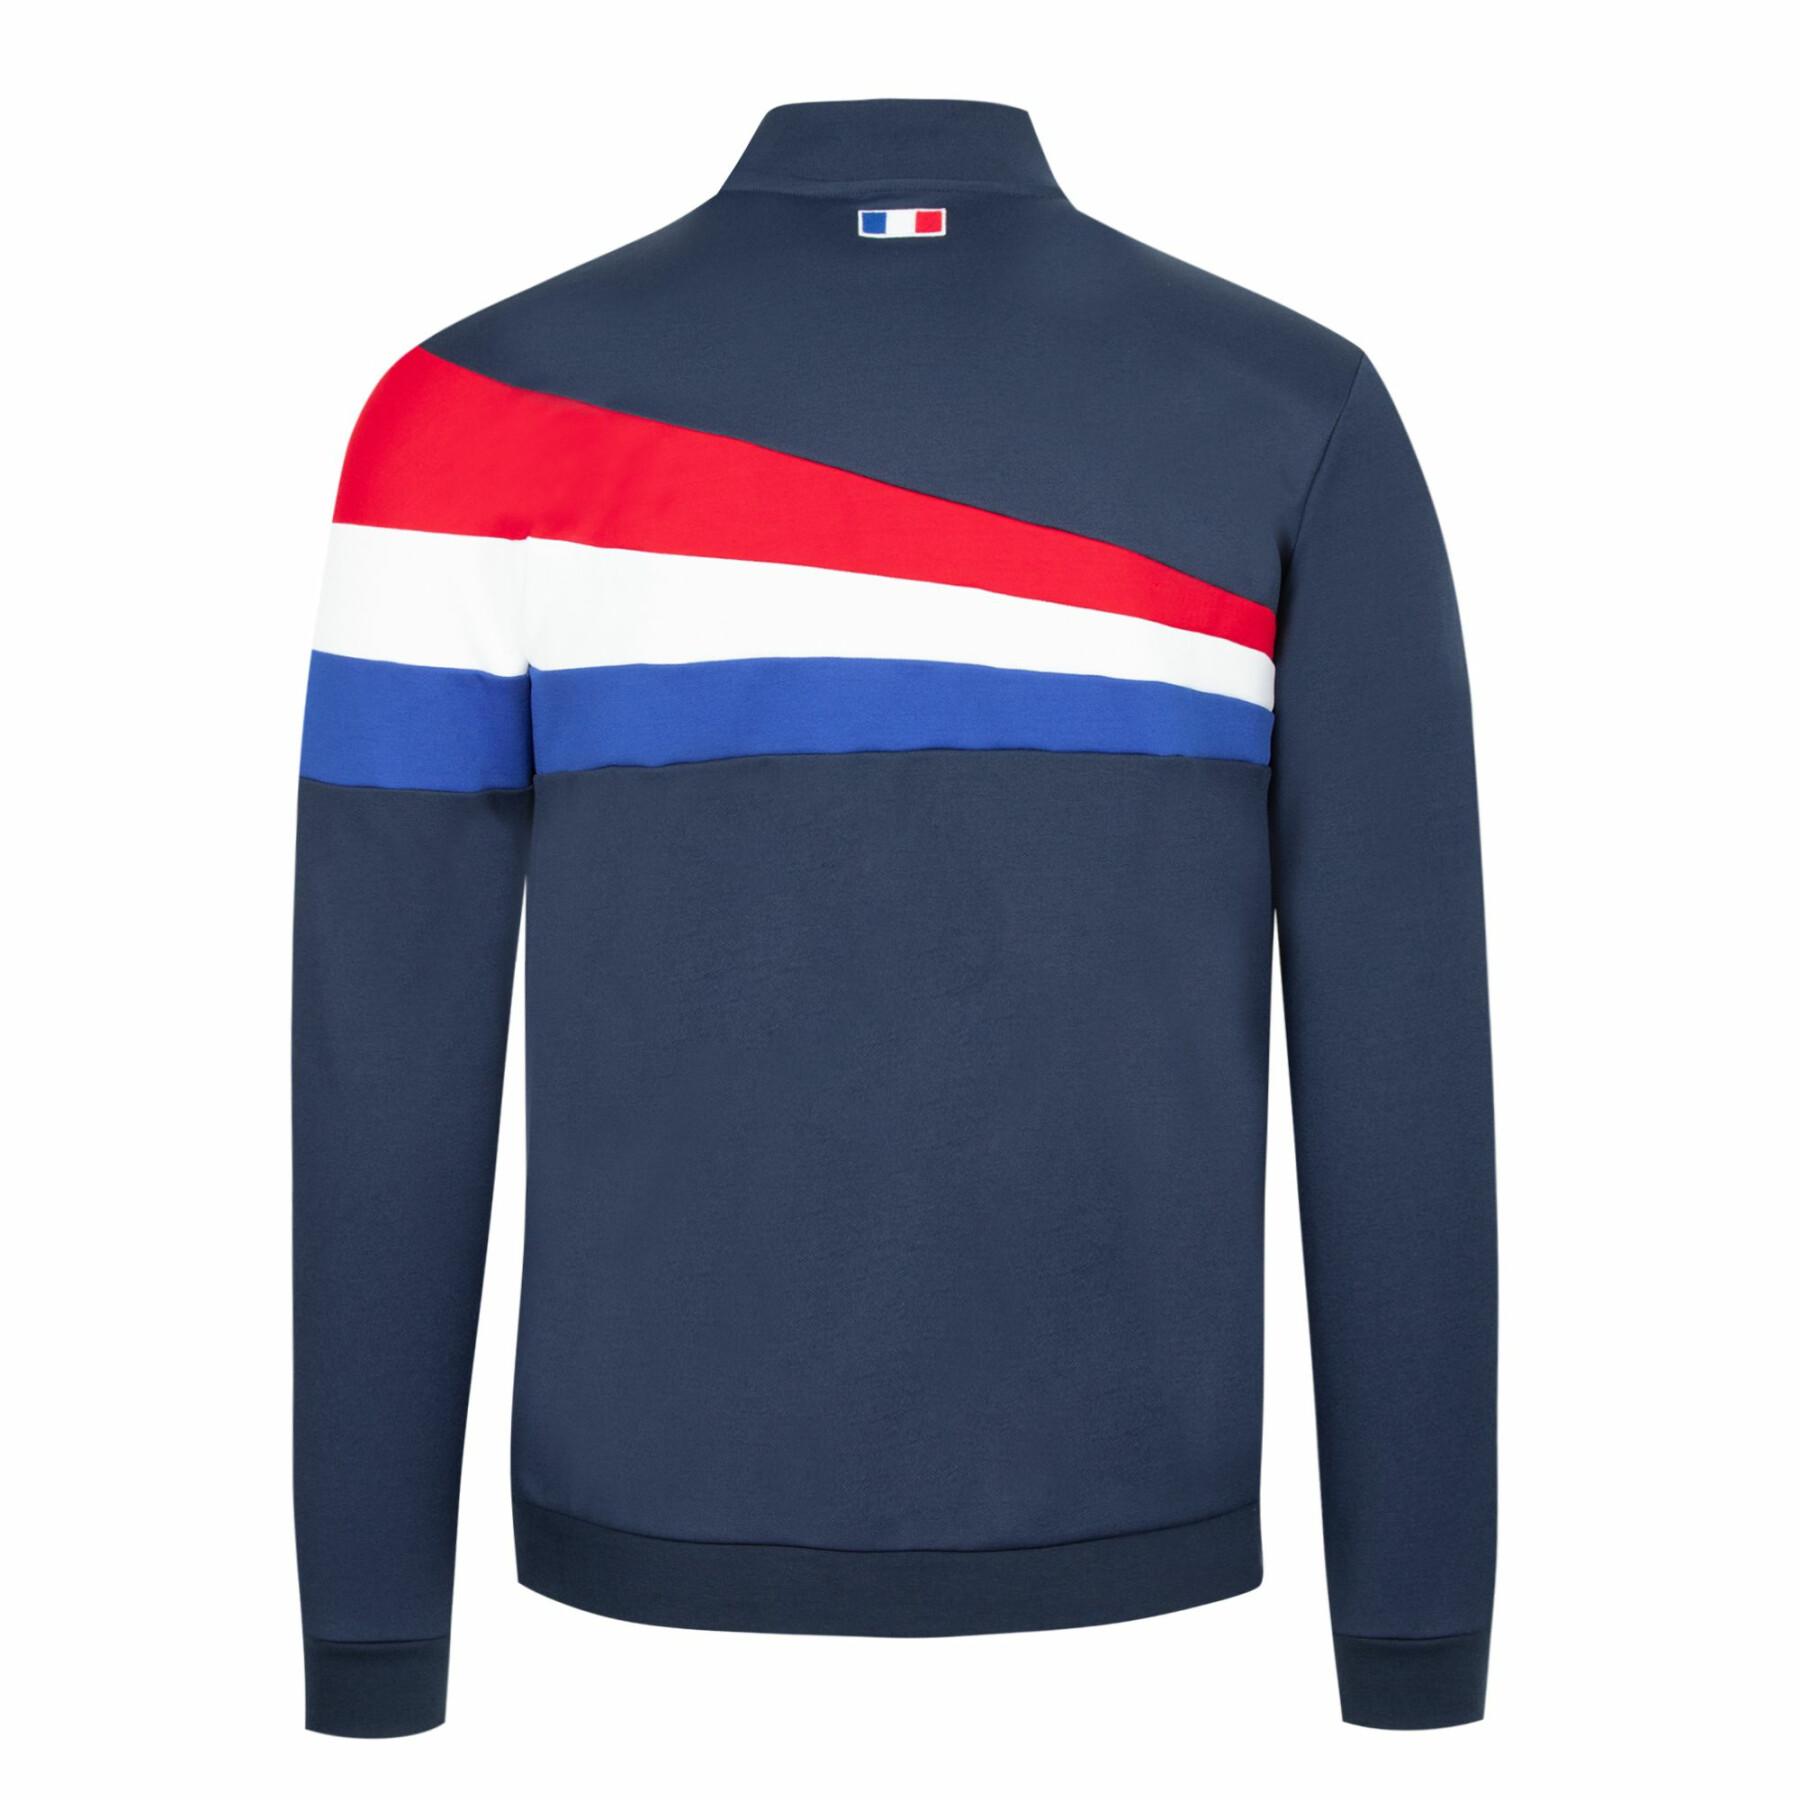 zipped presentation sweatshirt from France 2021/22